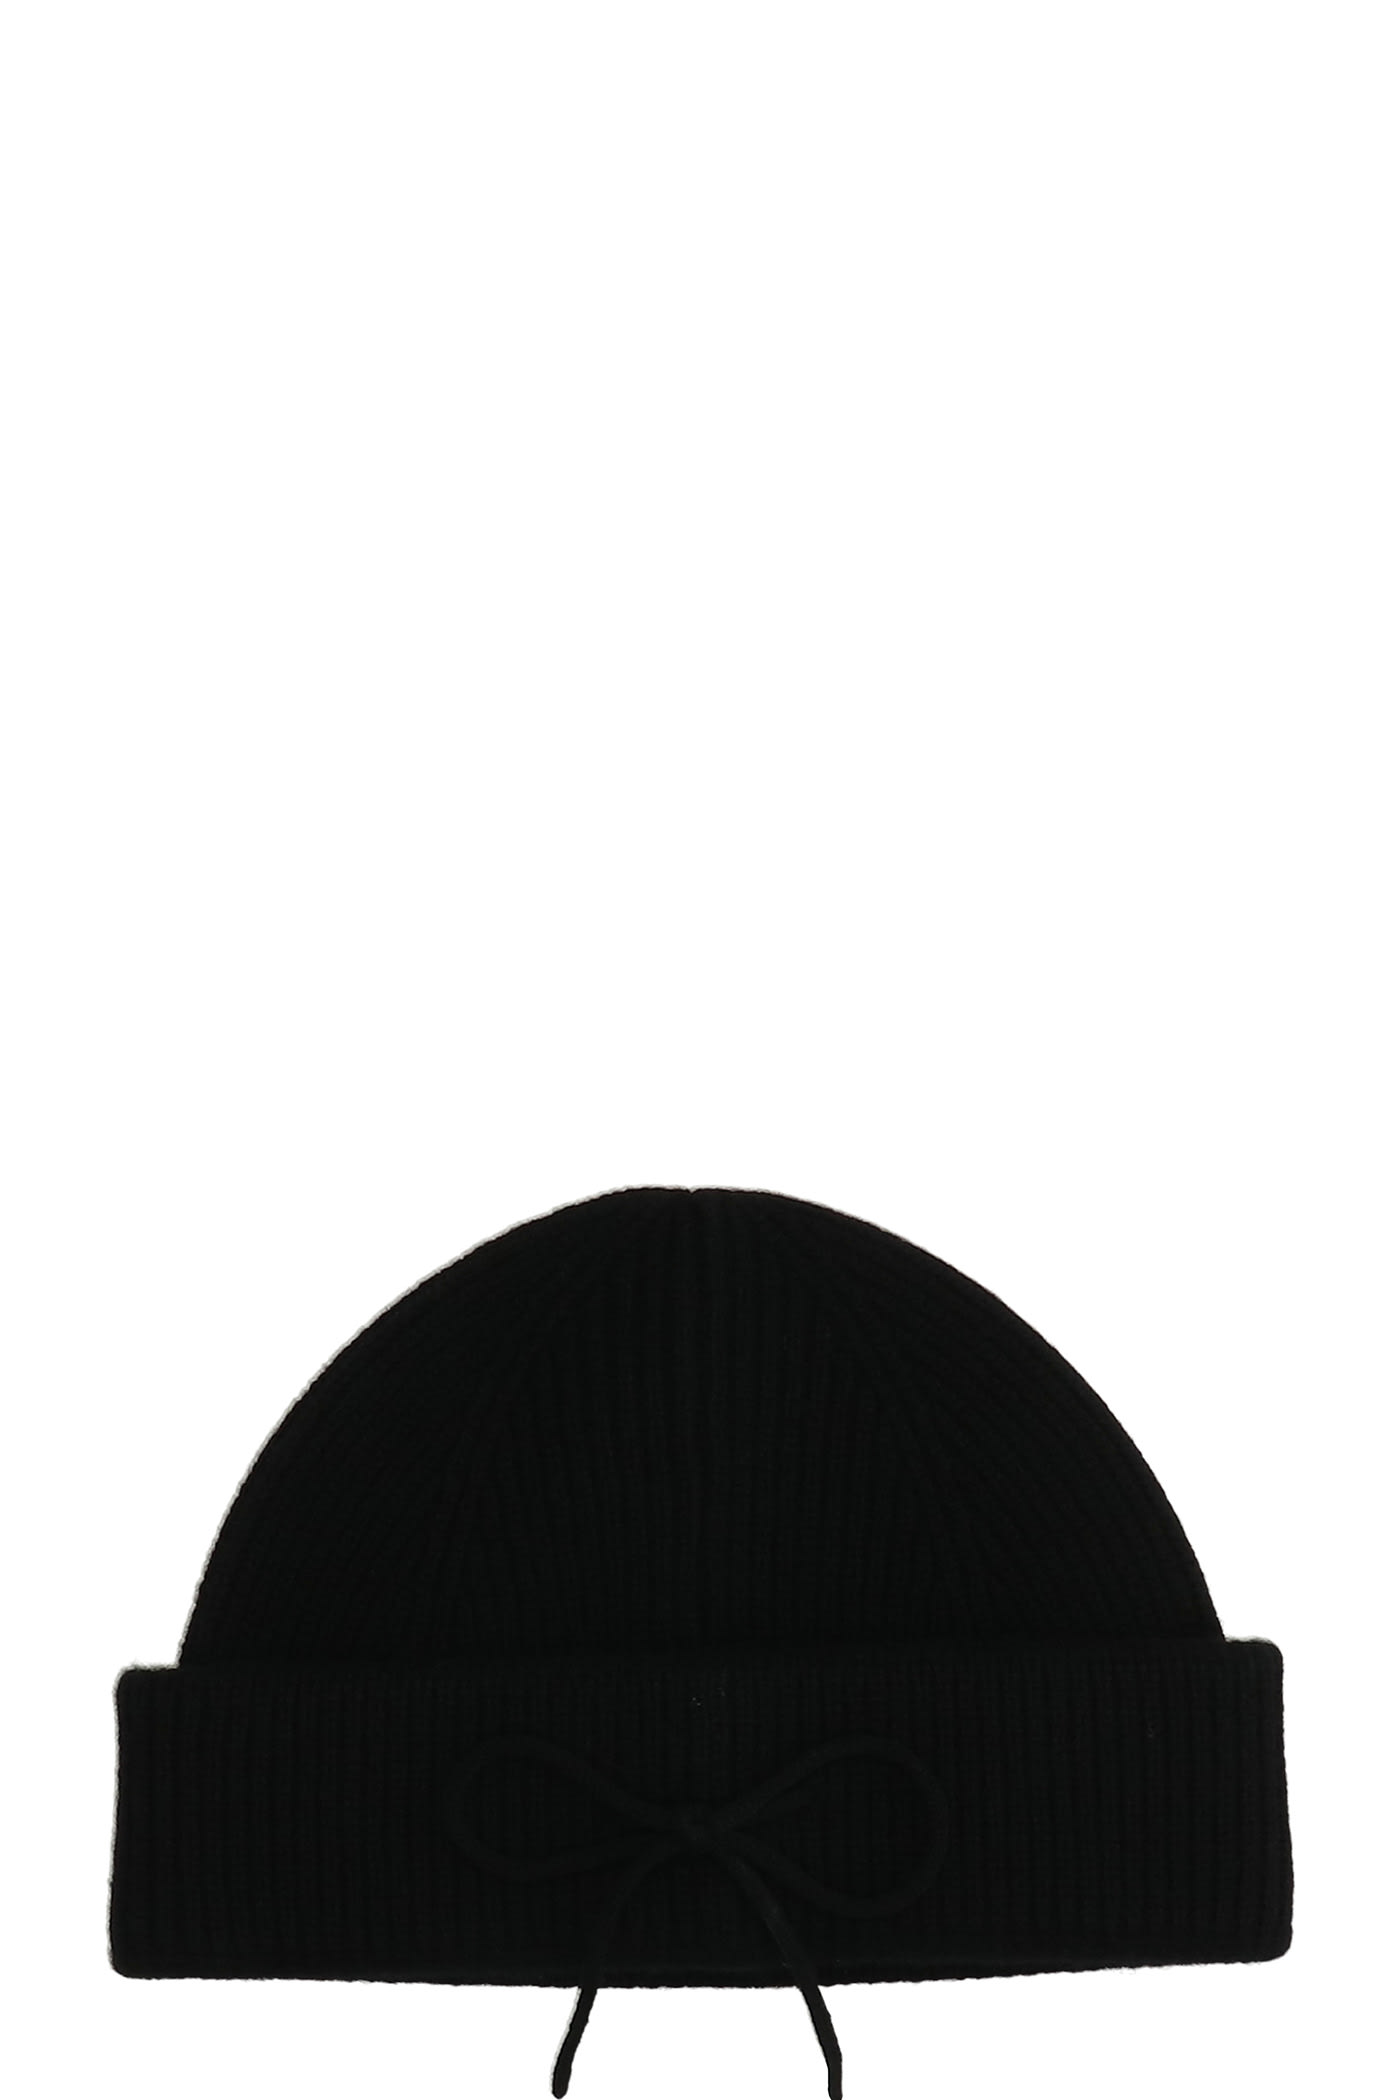 Craig Green Hats In Black Wool